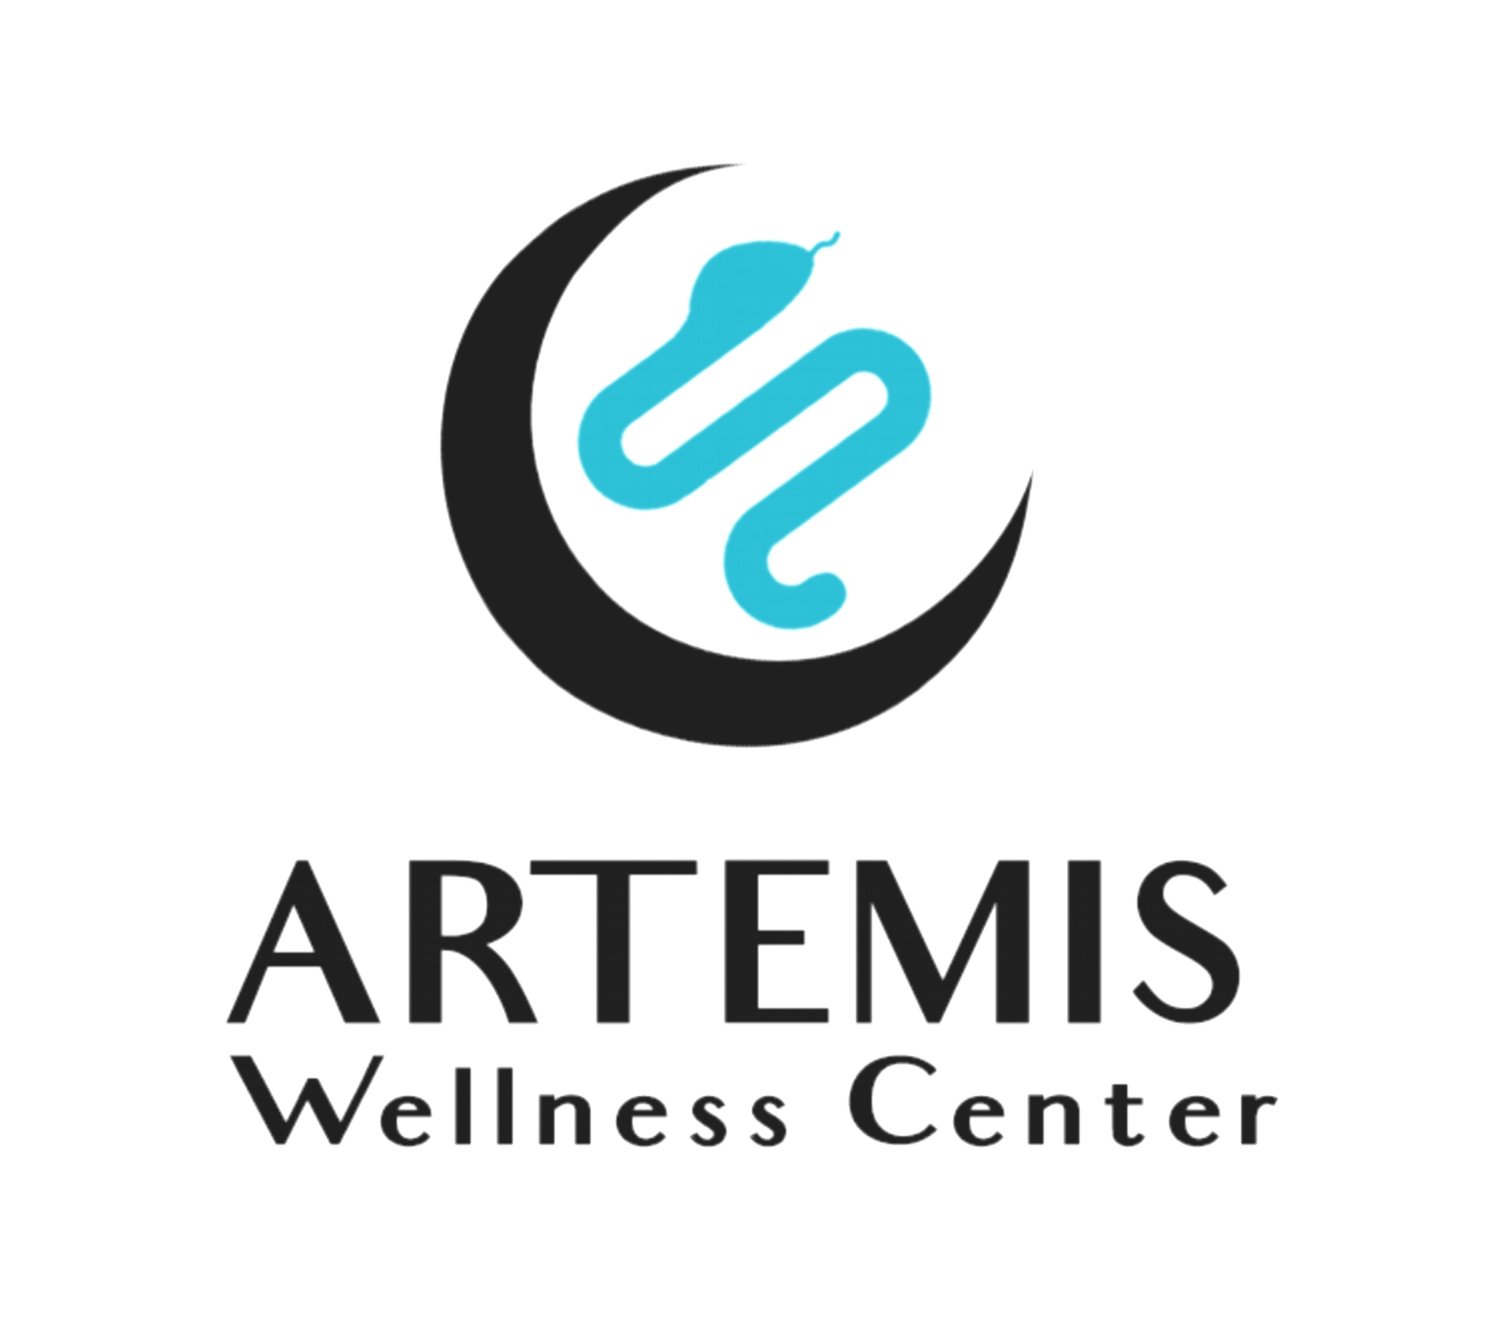 Artemis Wellness Center